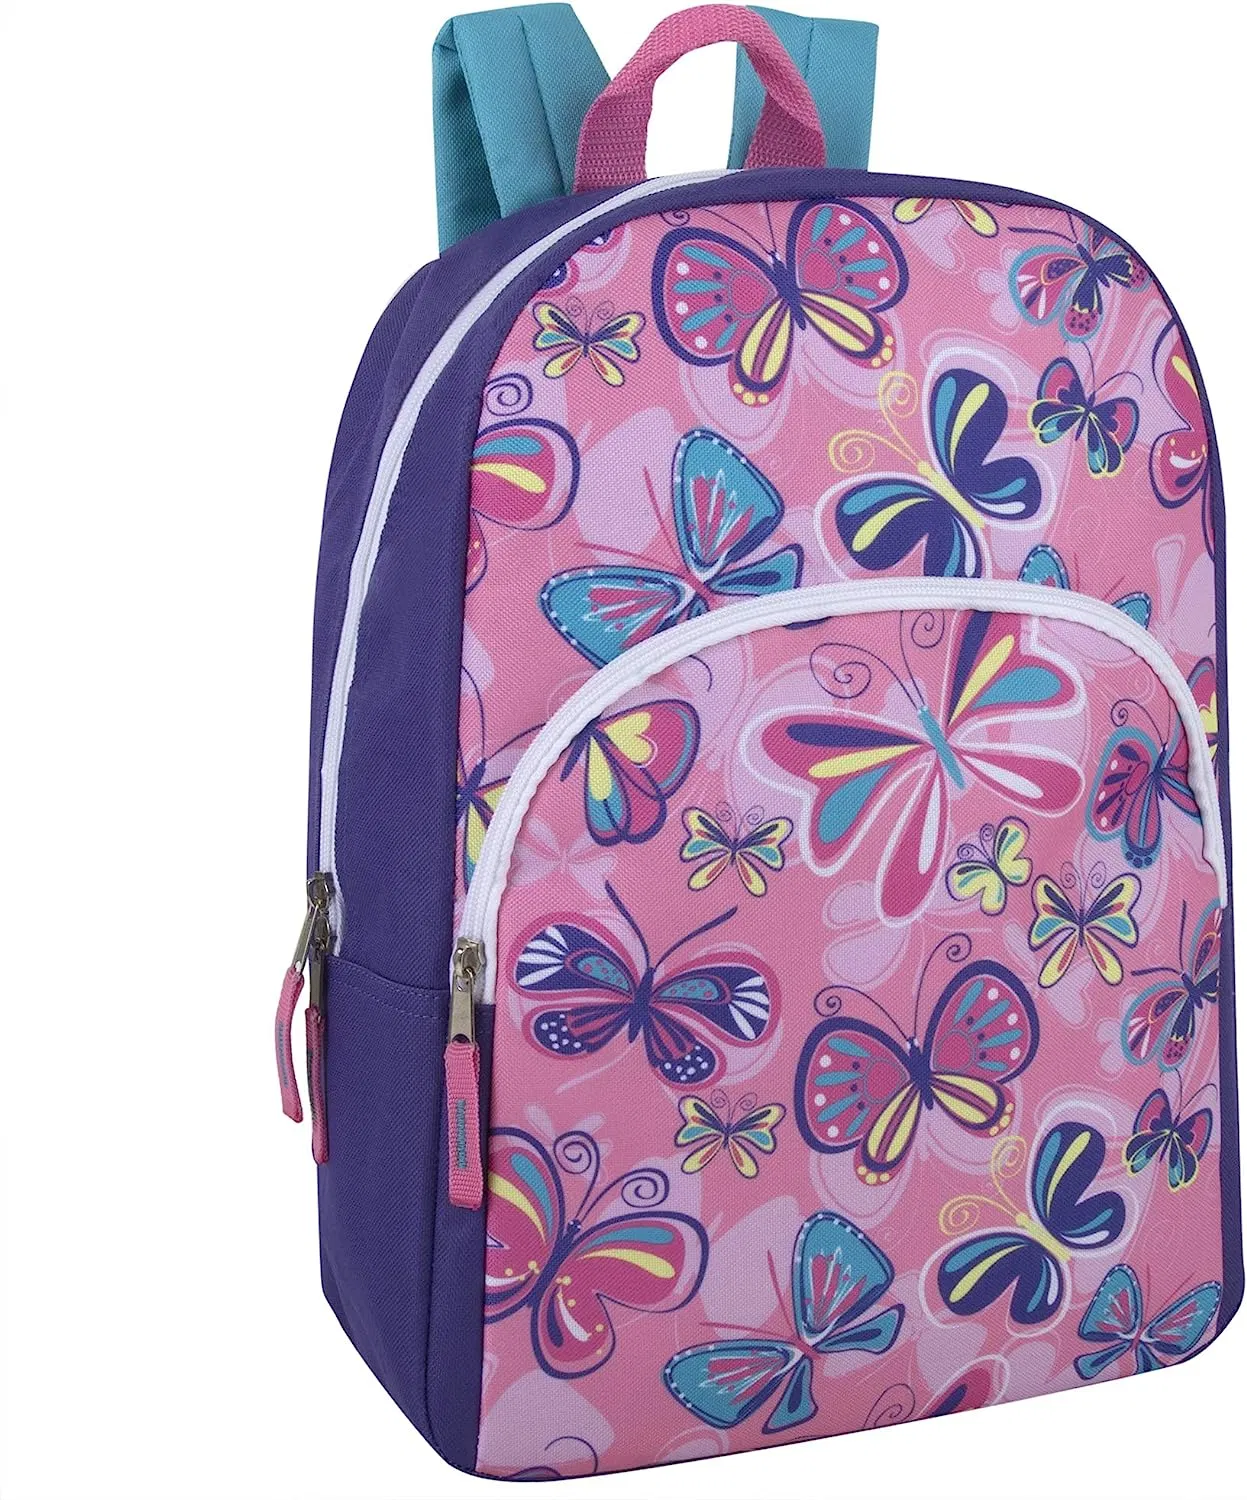 Unisex Kids' Character Backpacks with Adjustable, Padded Shoulder Straps (15")